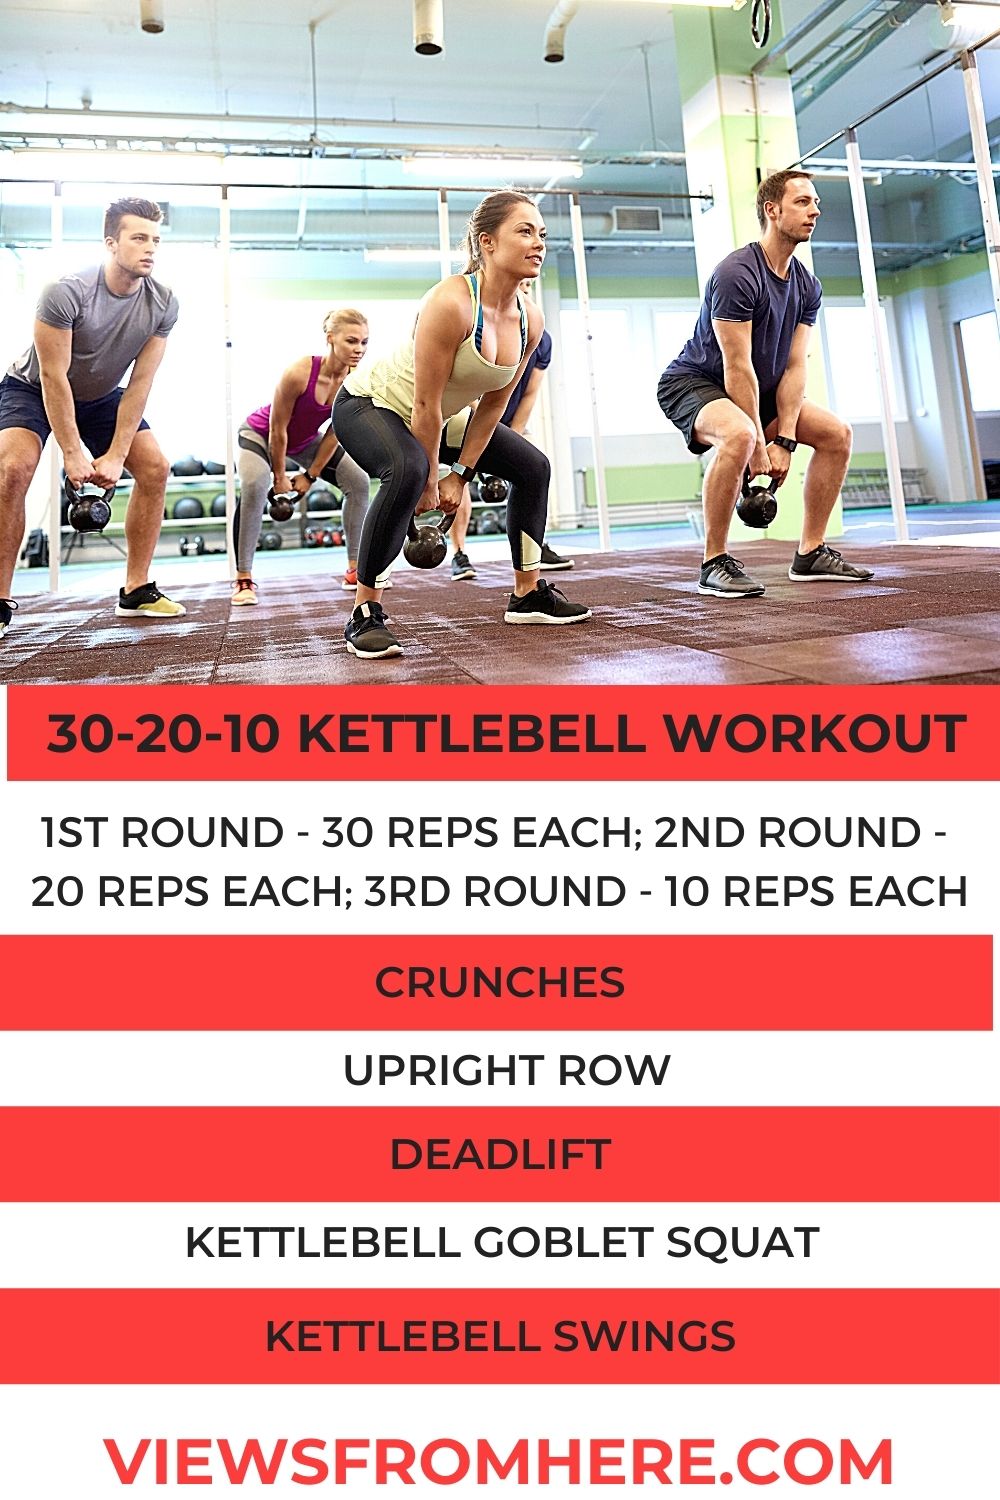 30_20_10 kettlebell workout image